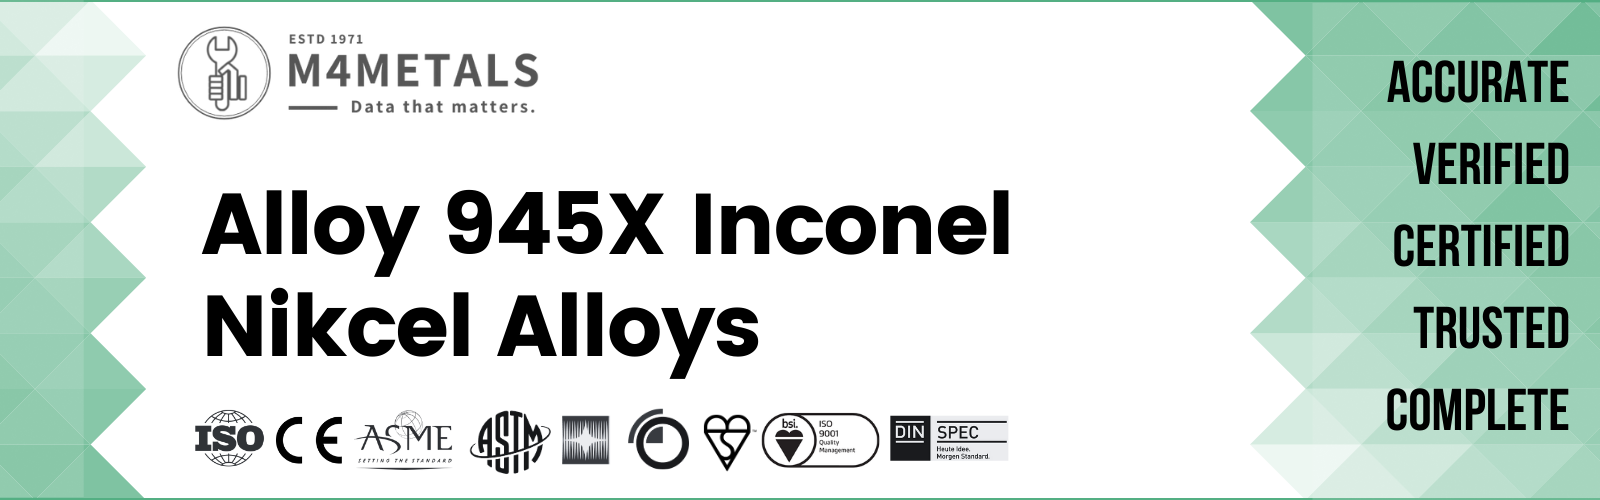 Inconel Alloy 945X